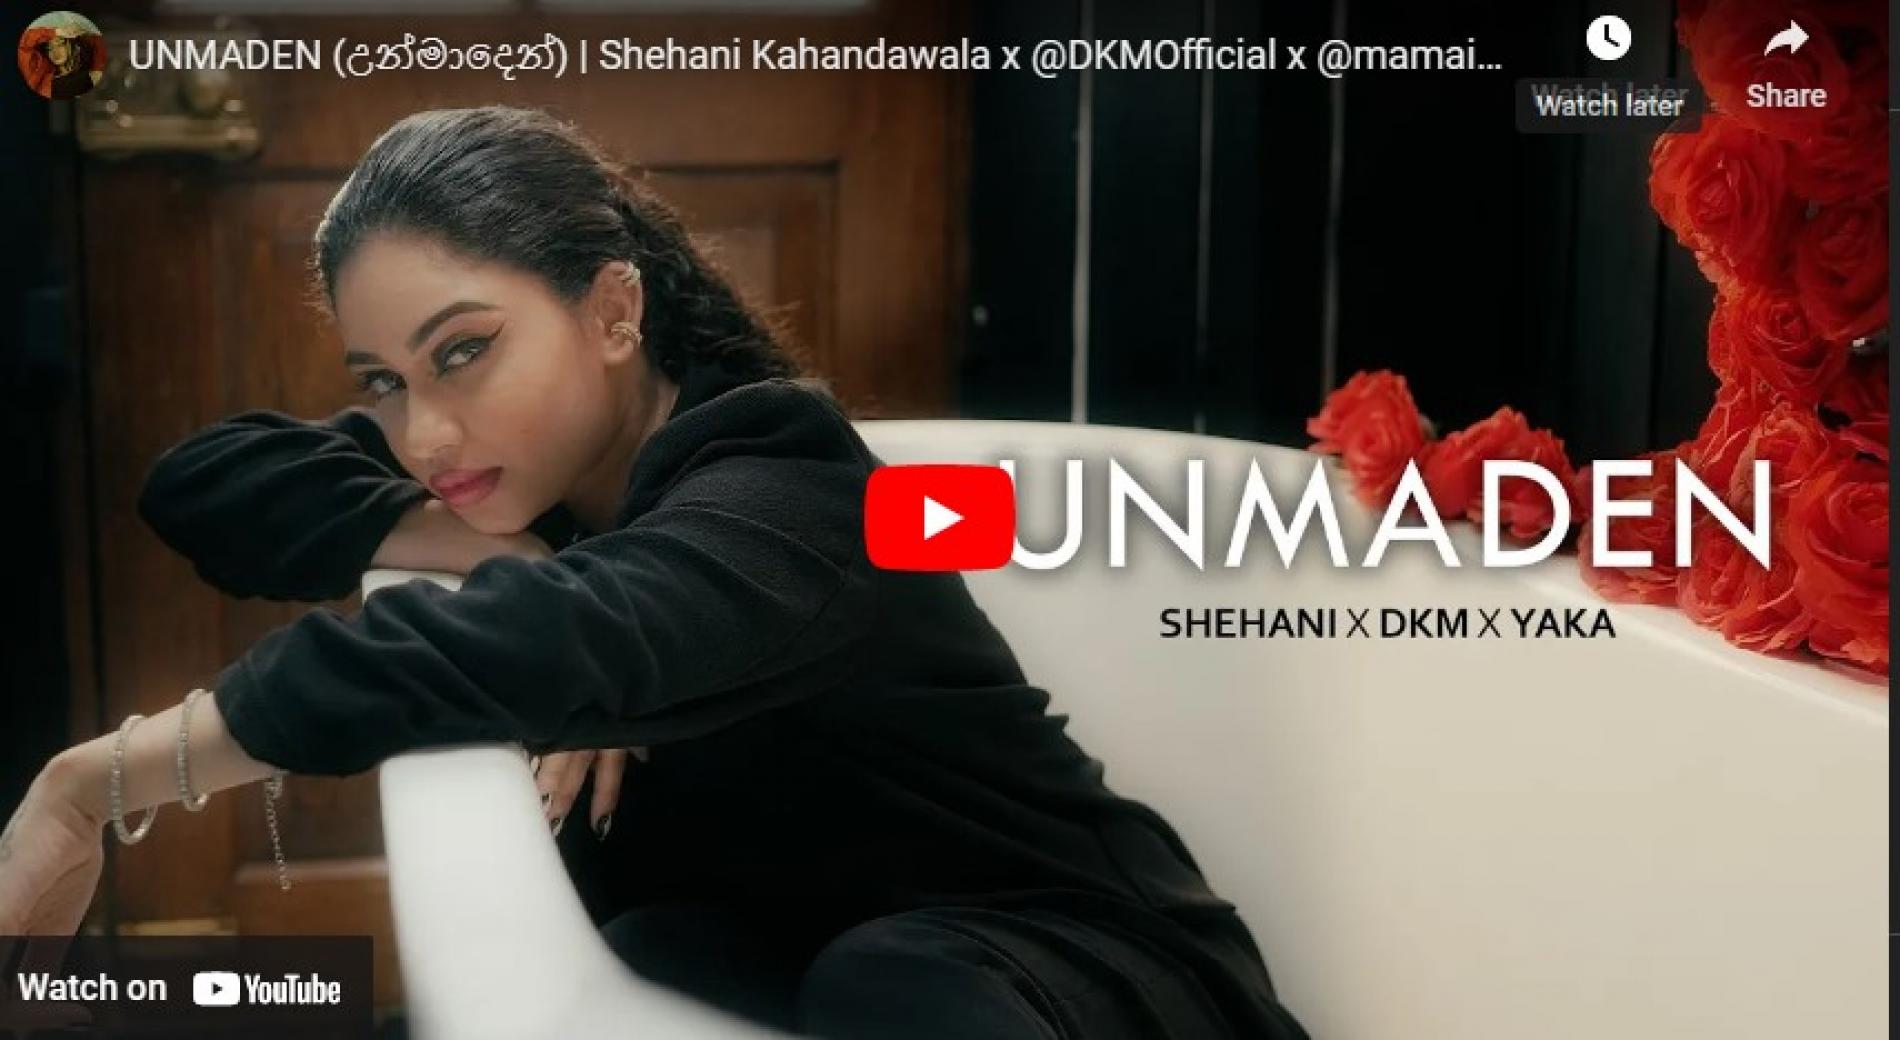 New Music : Unmaden (උන්මාදෙන්) | Shehani Kahandawala x DKM x Yaka [Official Music Video]